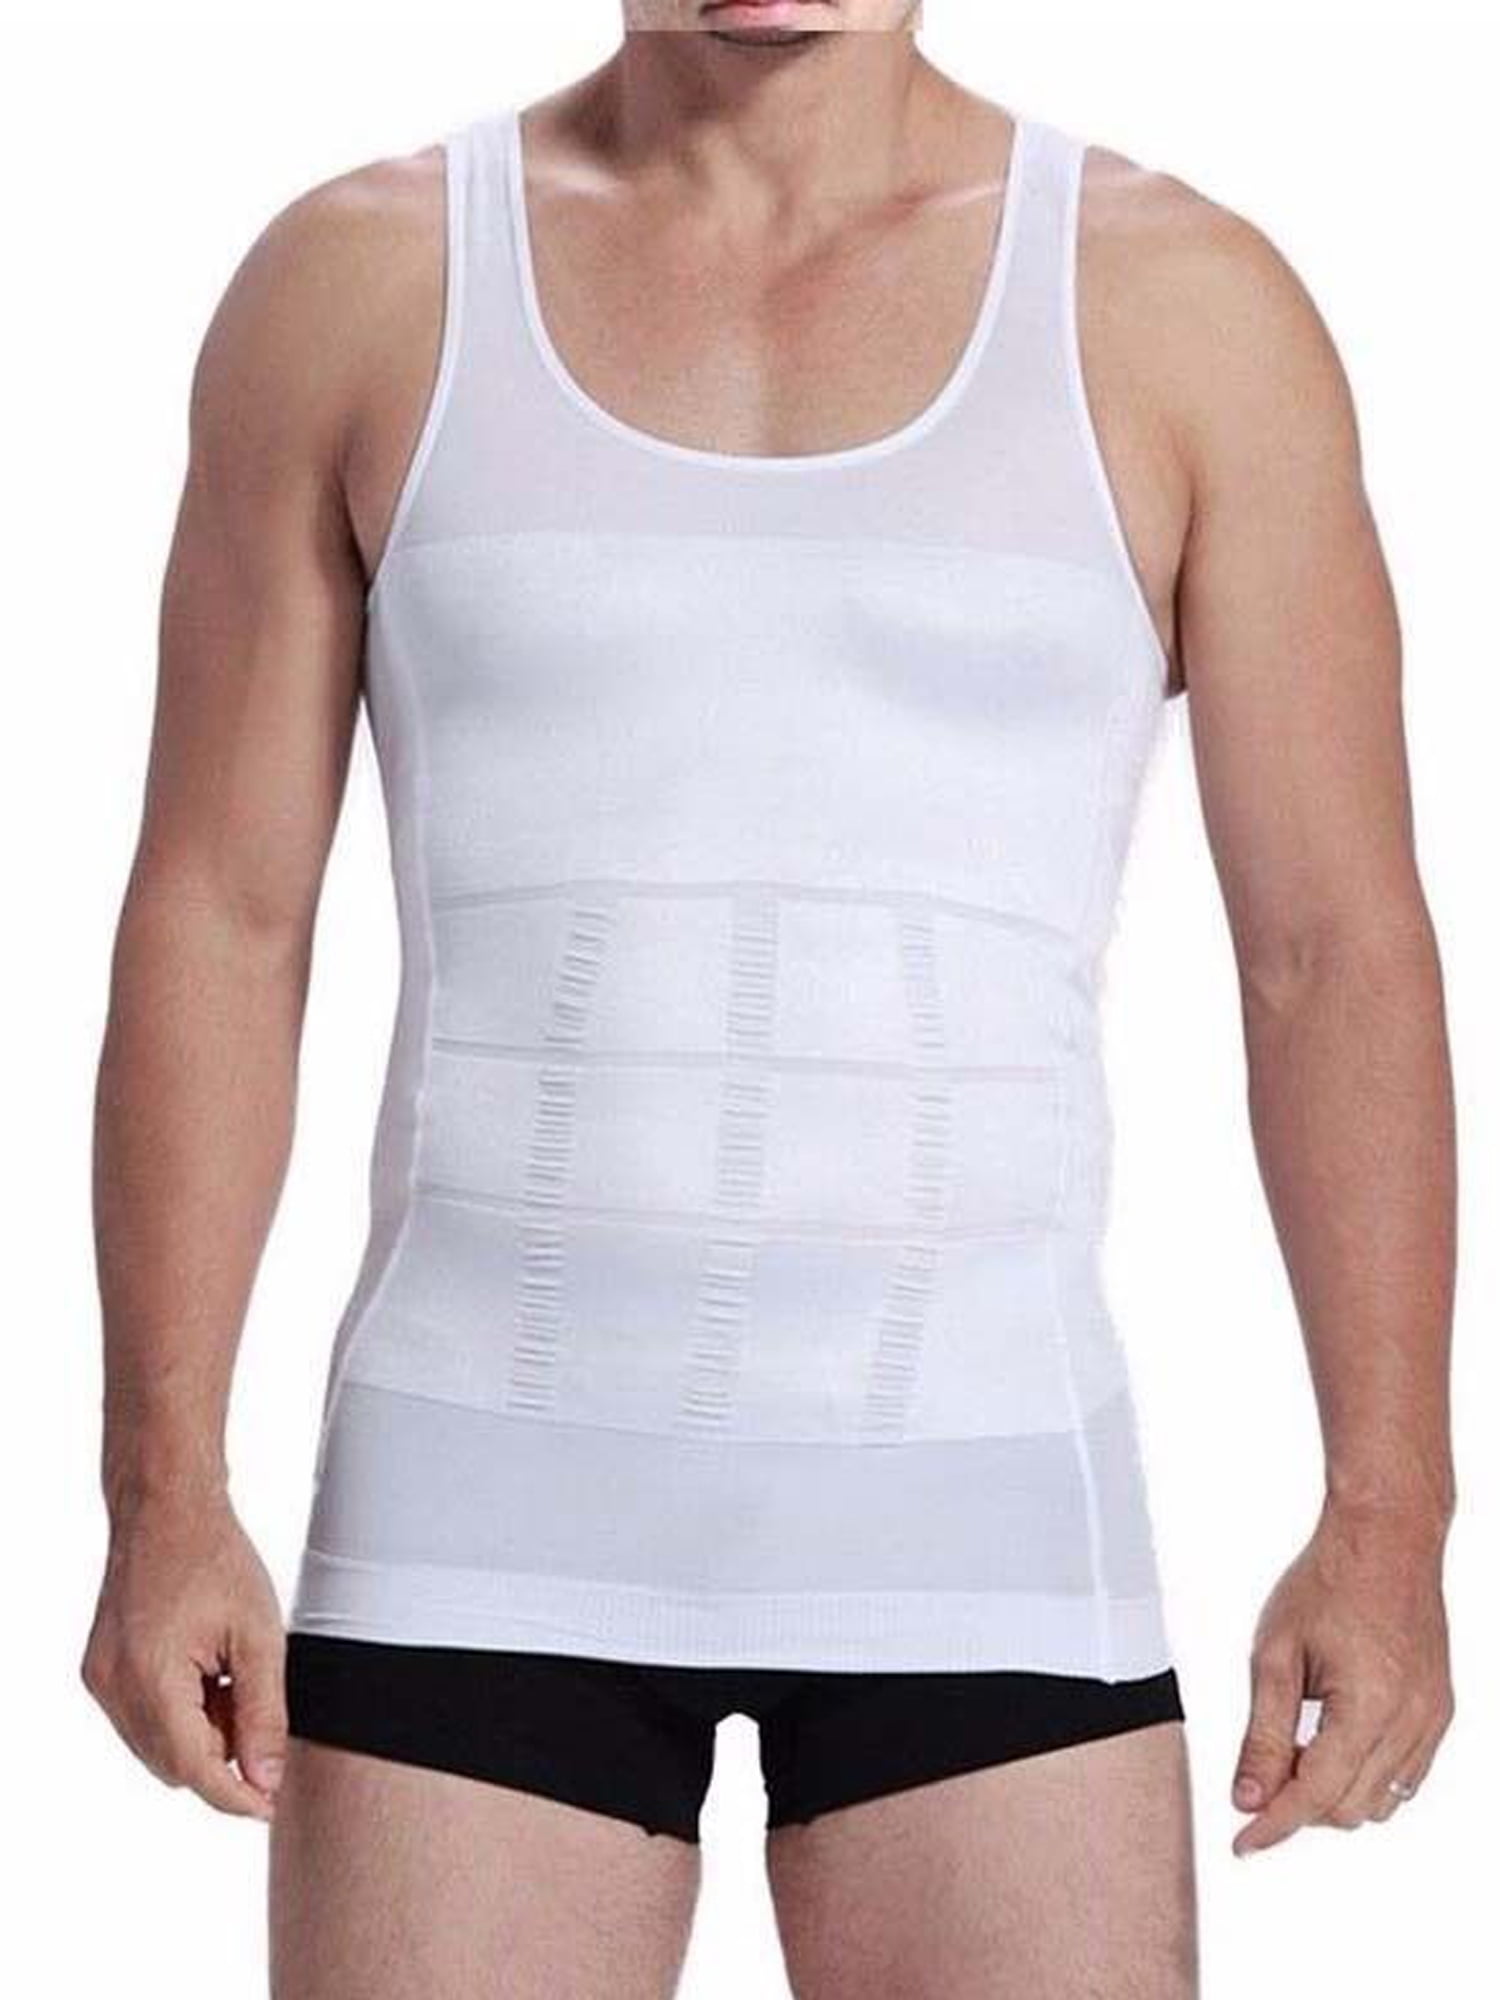 Tri-Slim Body Shaper For Men Slimming Shirt Vest Weight Loss Fat Blocker Burner not Pills 47 L 